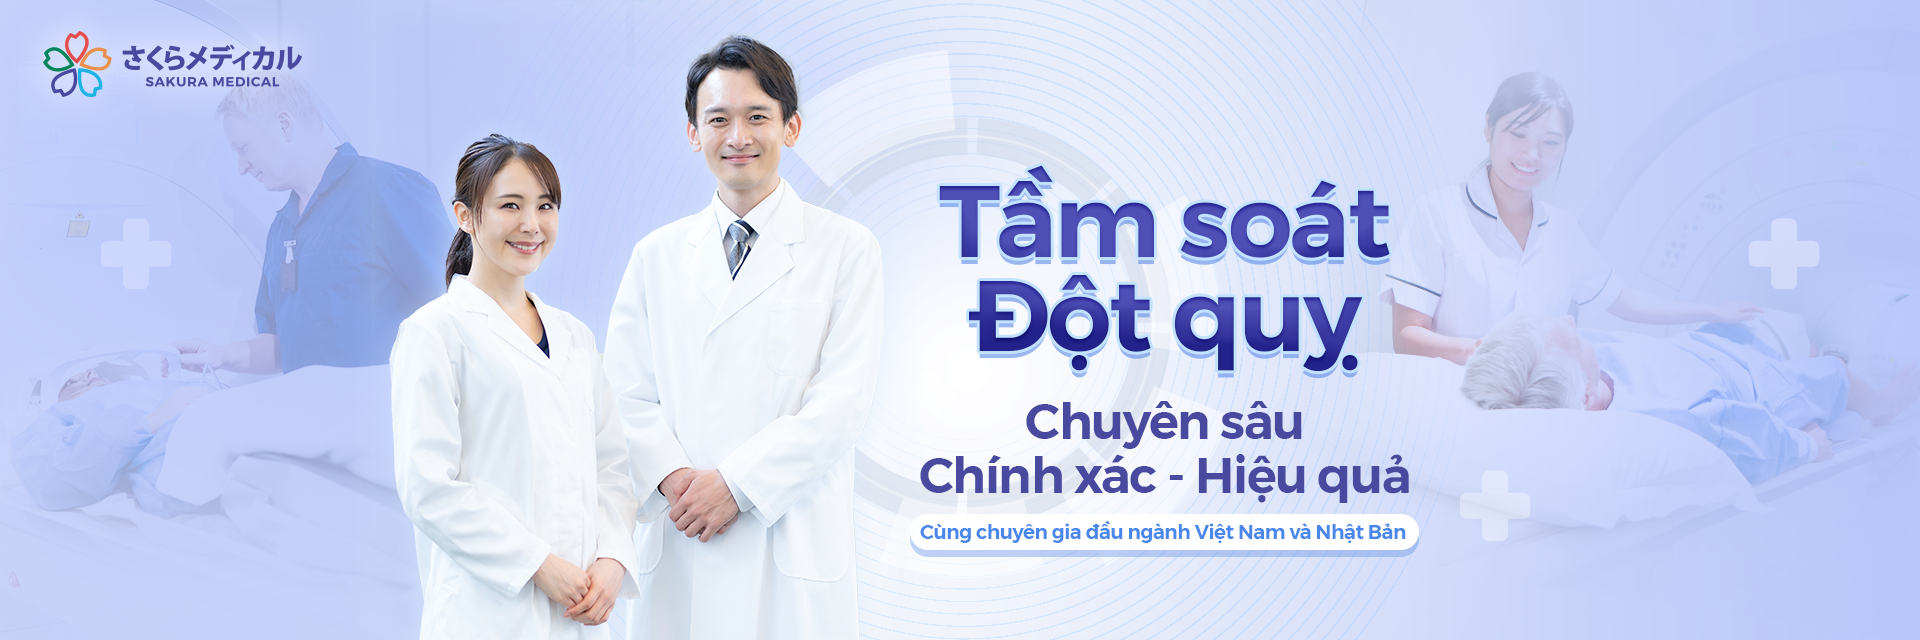 Banner Web Tam Soat Dot Quy